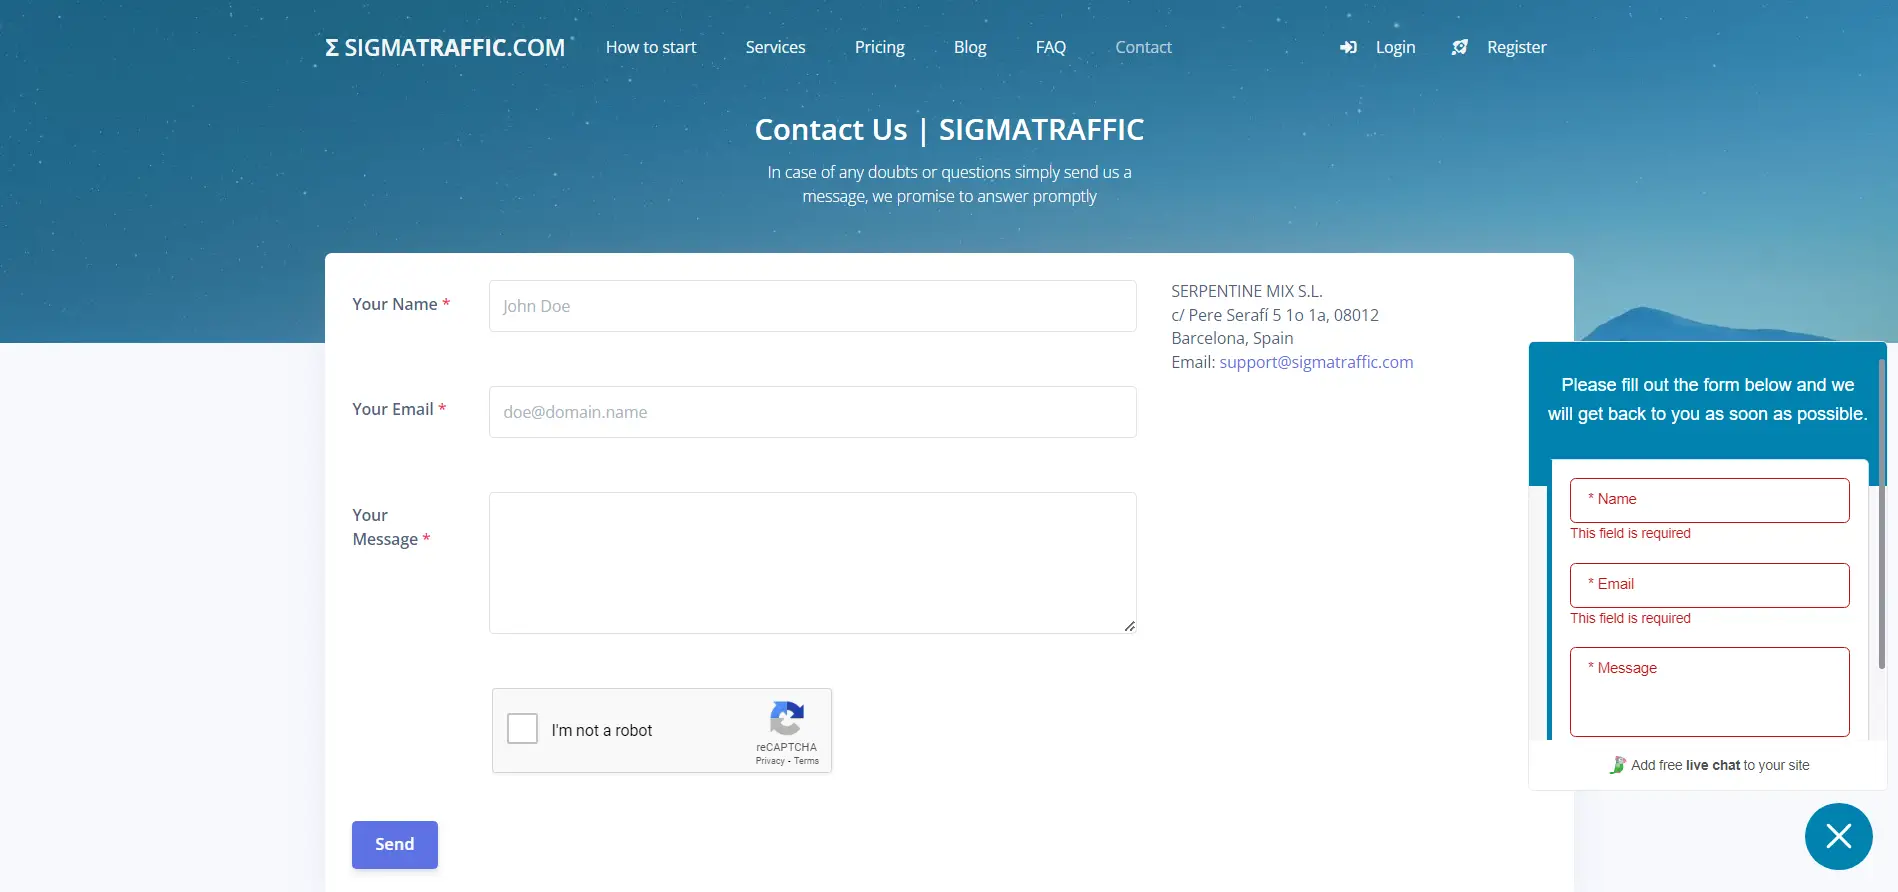 Sigma Traffic contact page screenshot.